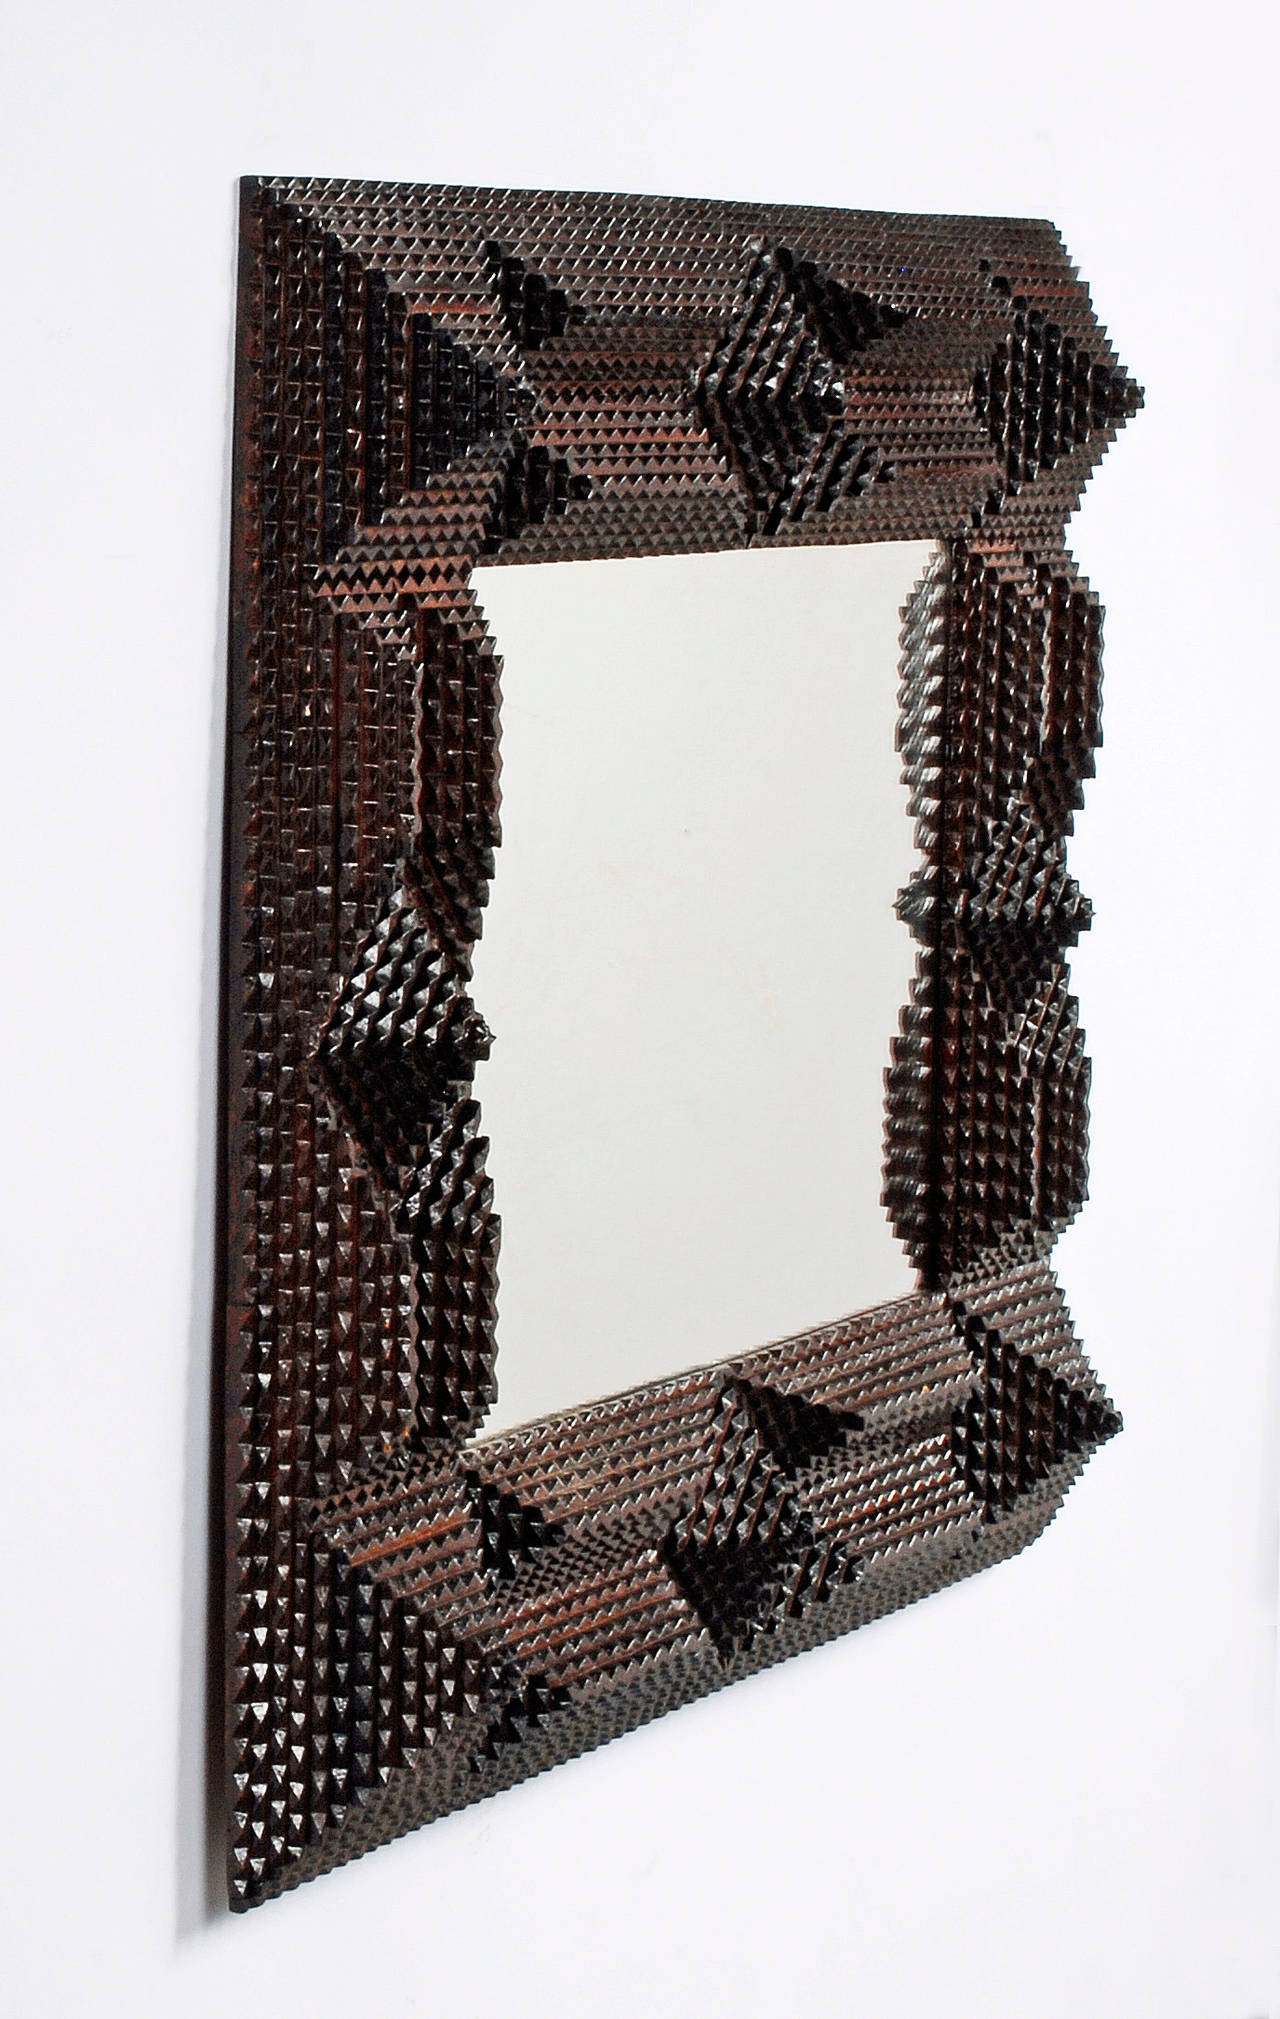 20th Century Tramp Art Mirror Frame with Diamond Design